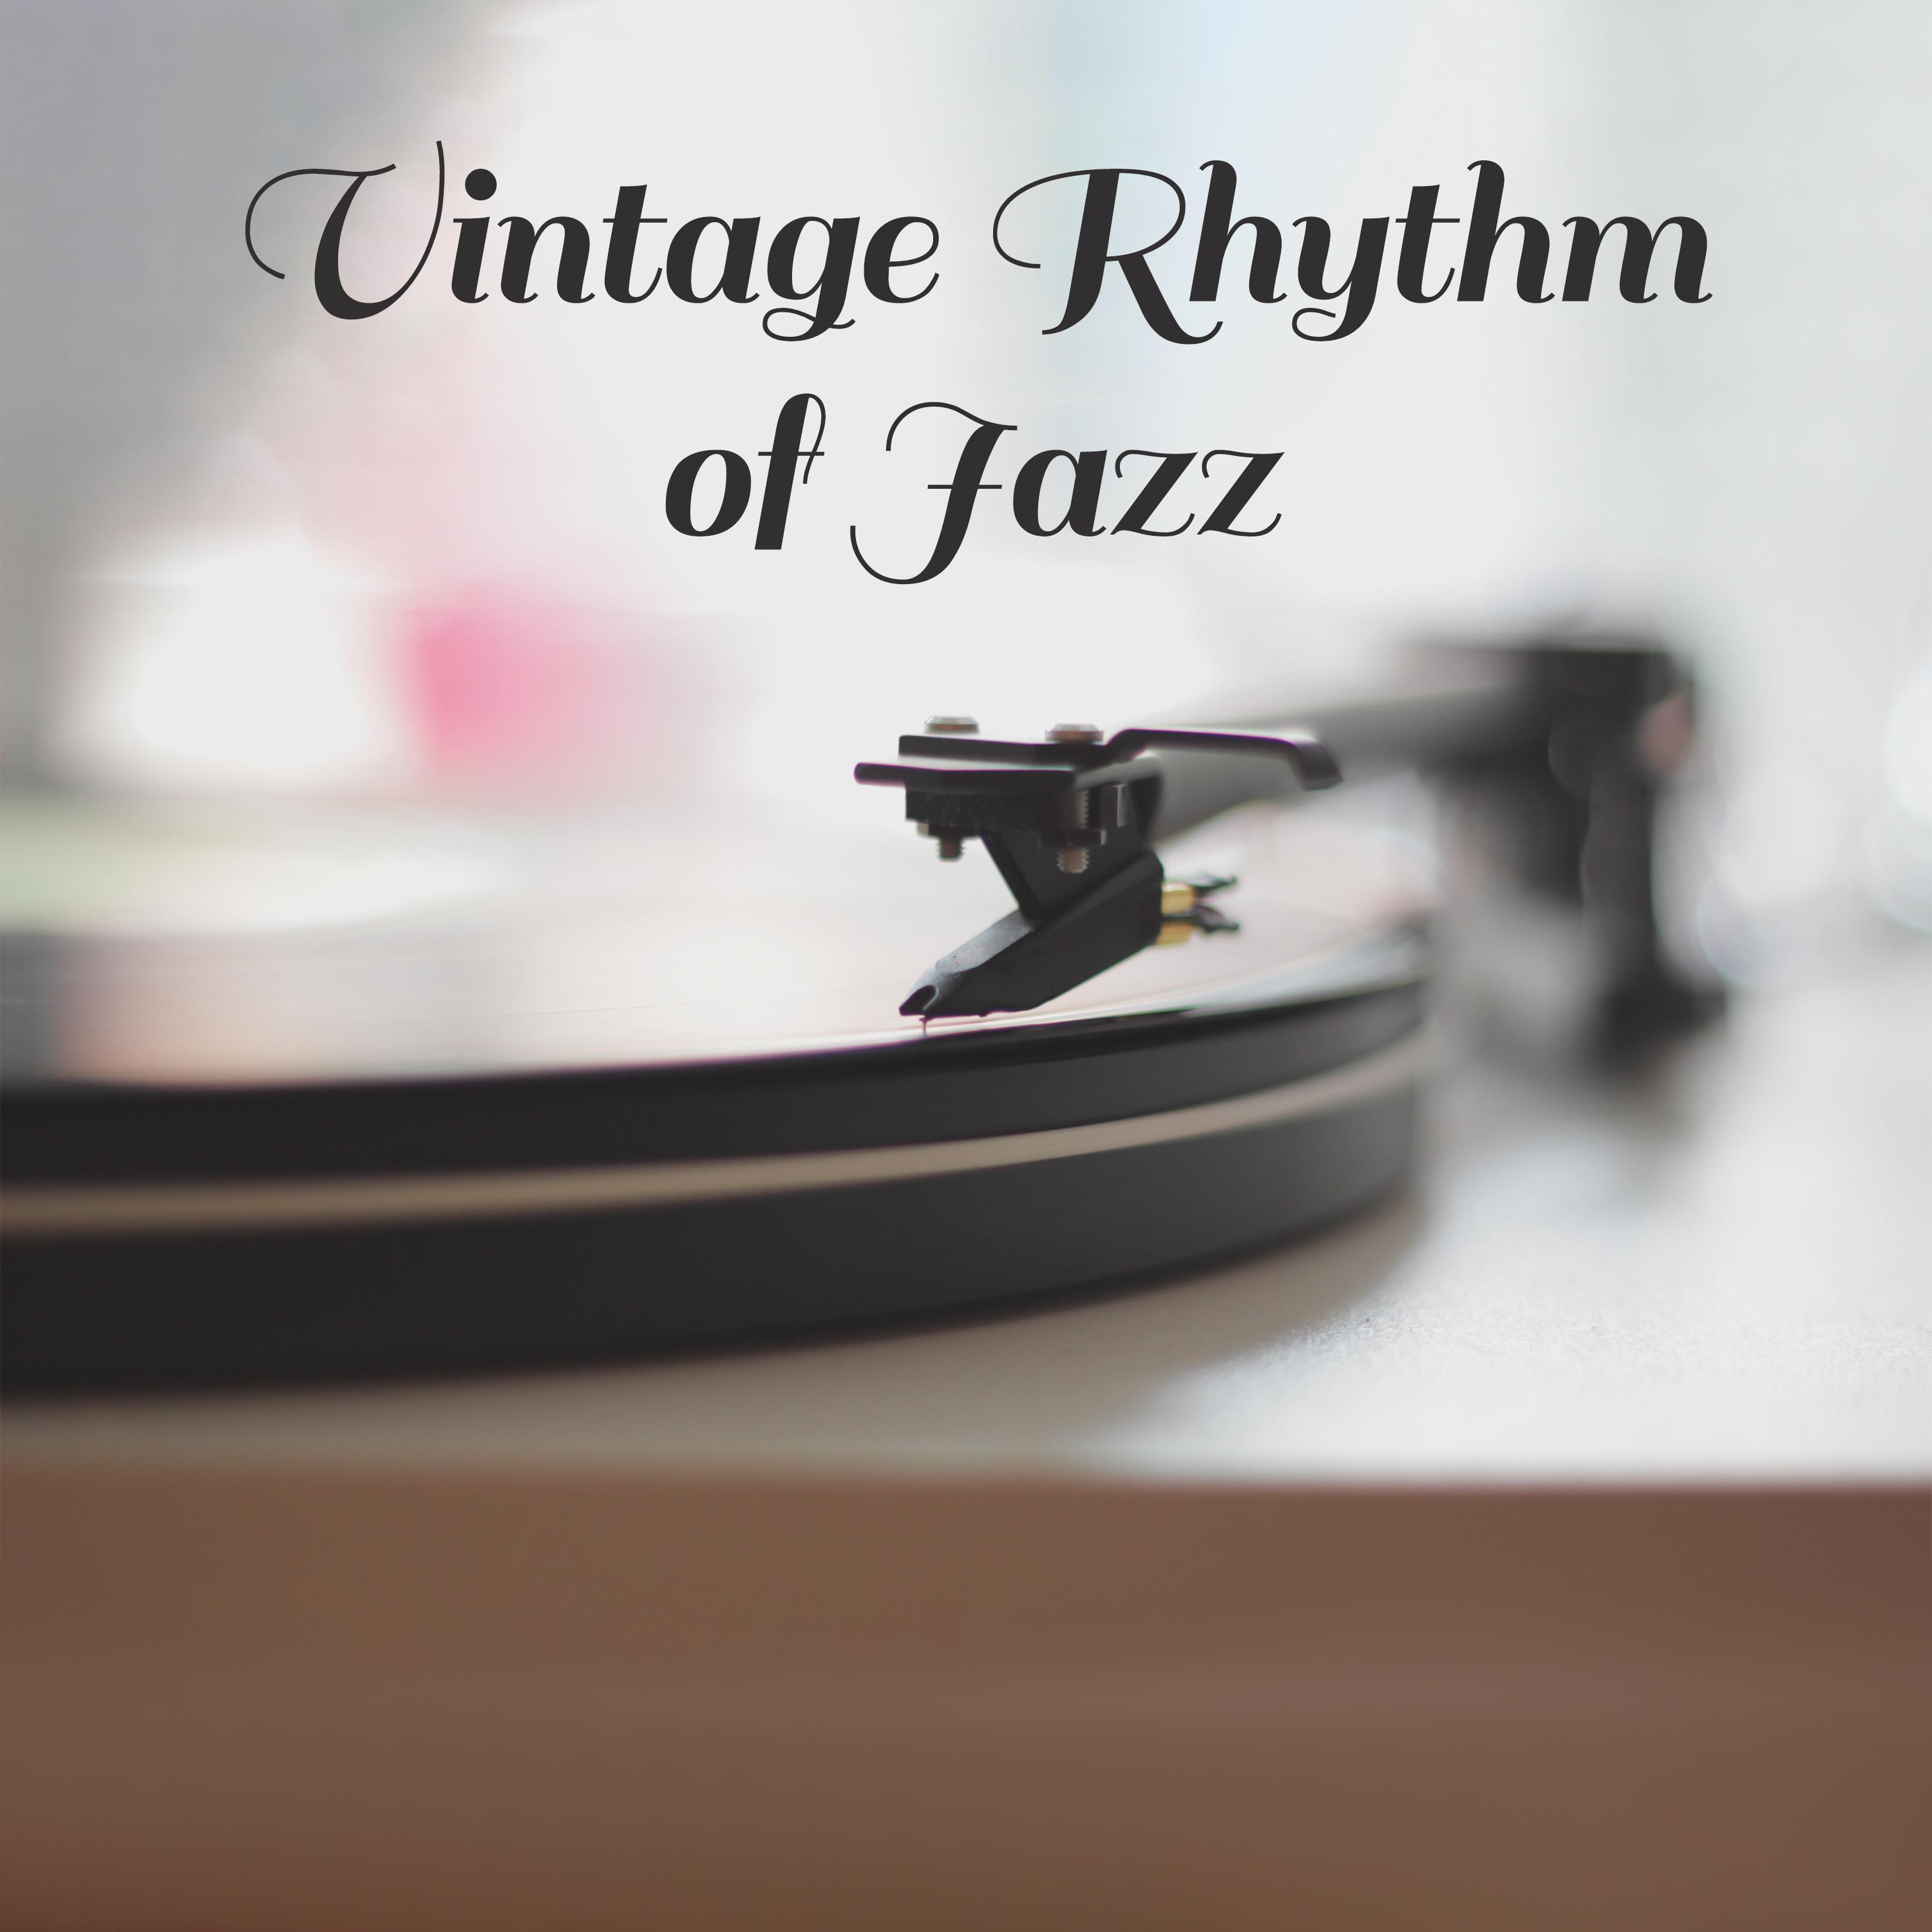 Vintage Rhythm of Jazz (Atmospheric Music Until Late at Night)